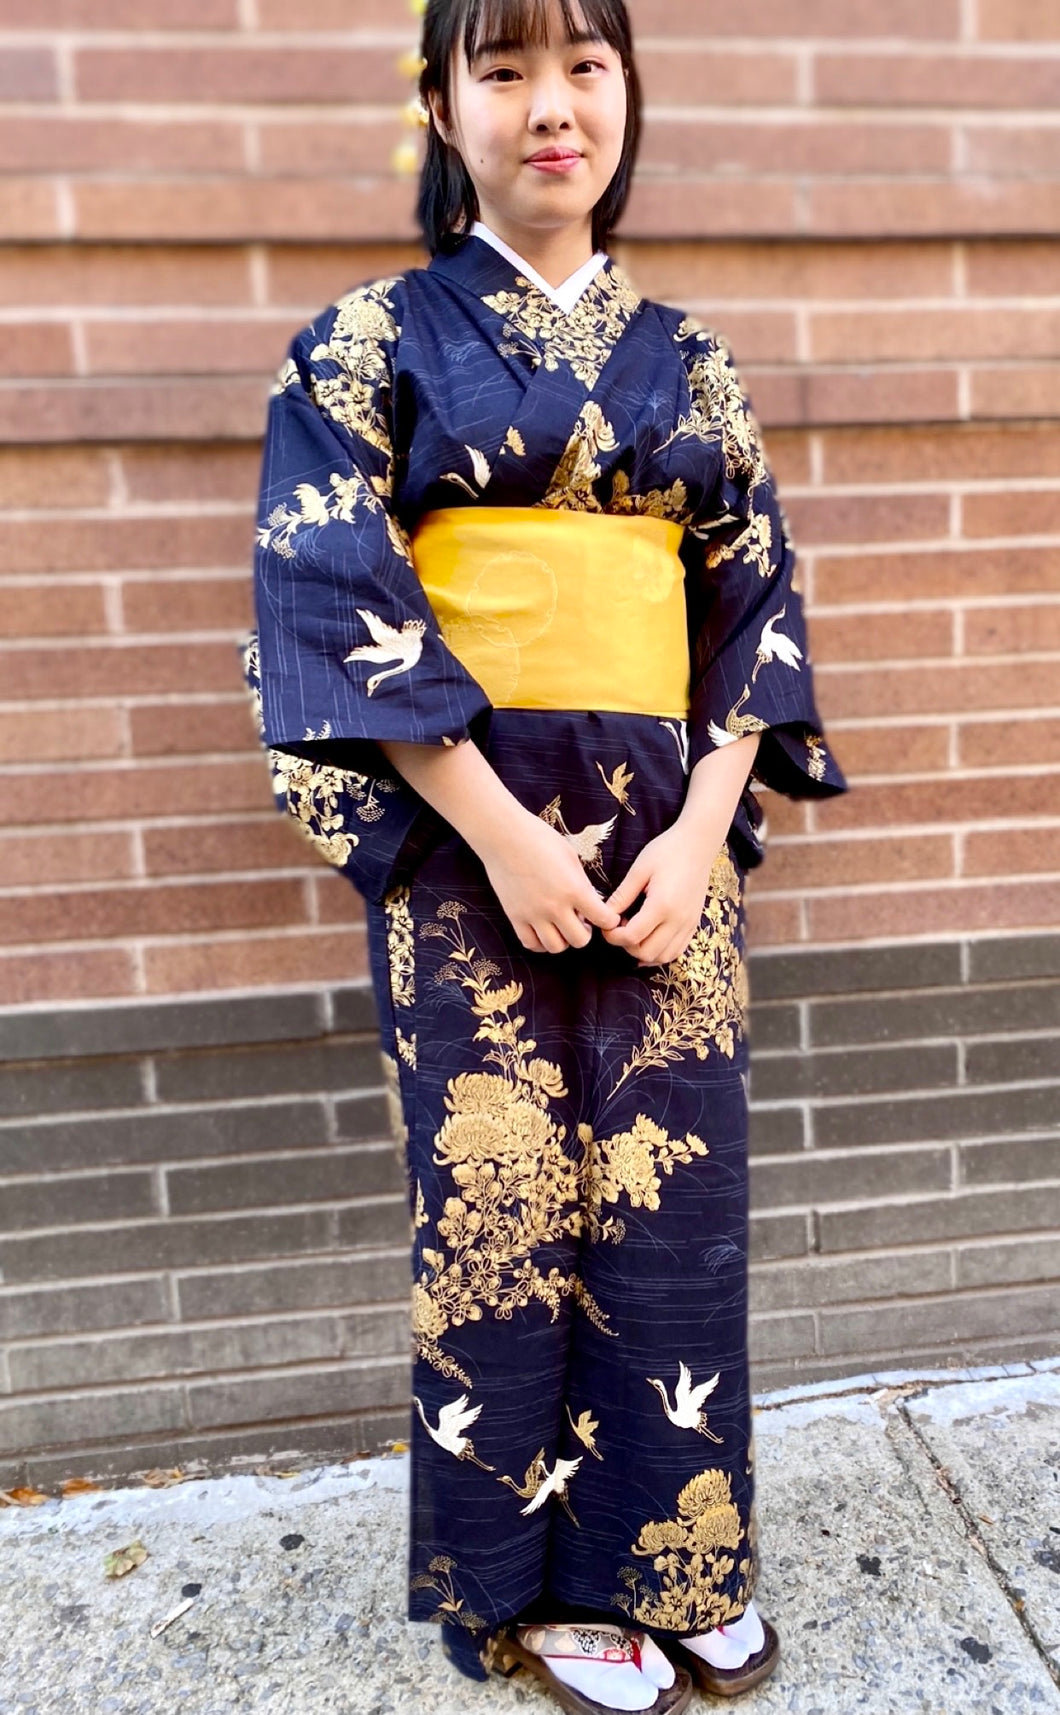 Kimono Sleeve Robe - cranes with gold flowers on navy